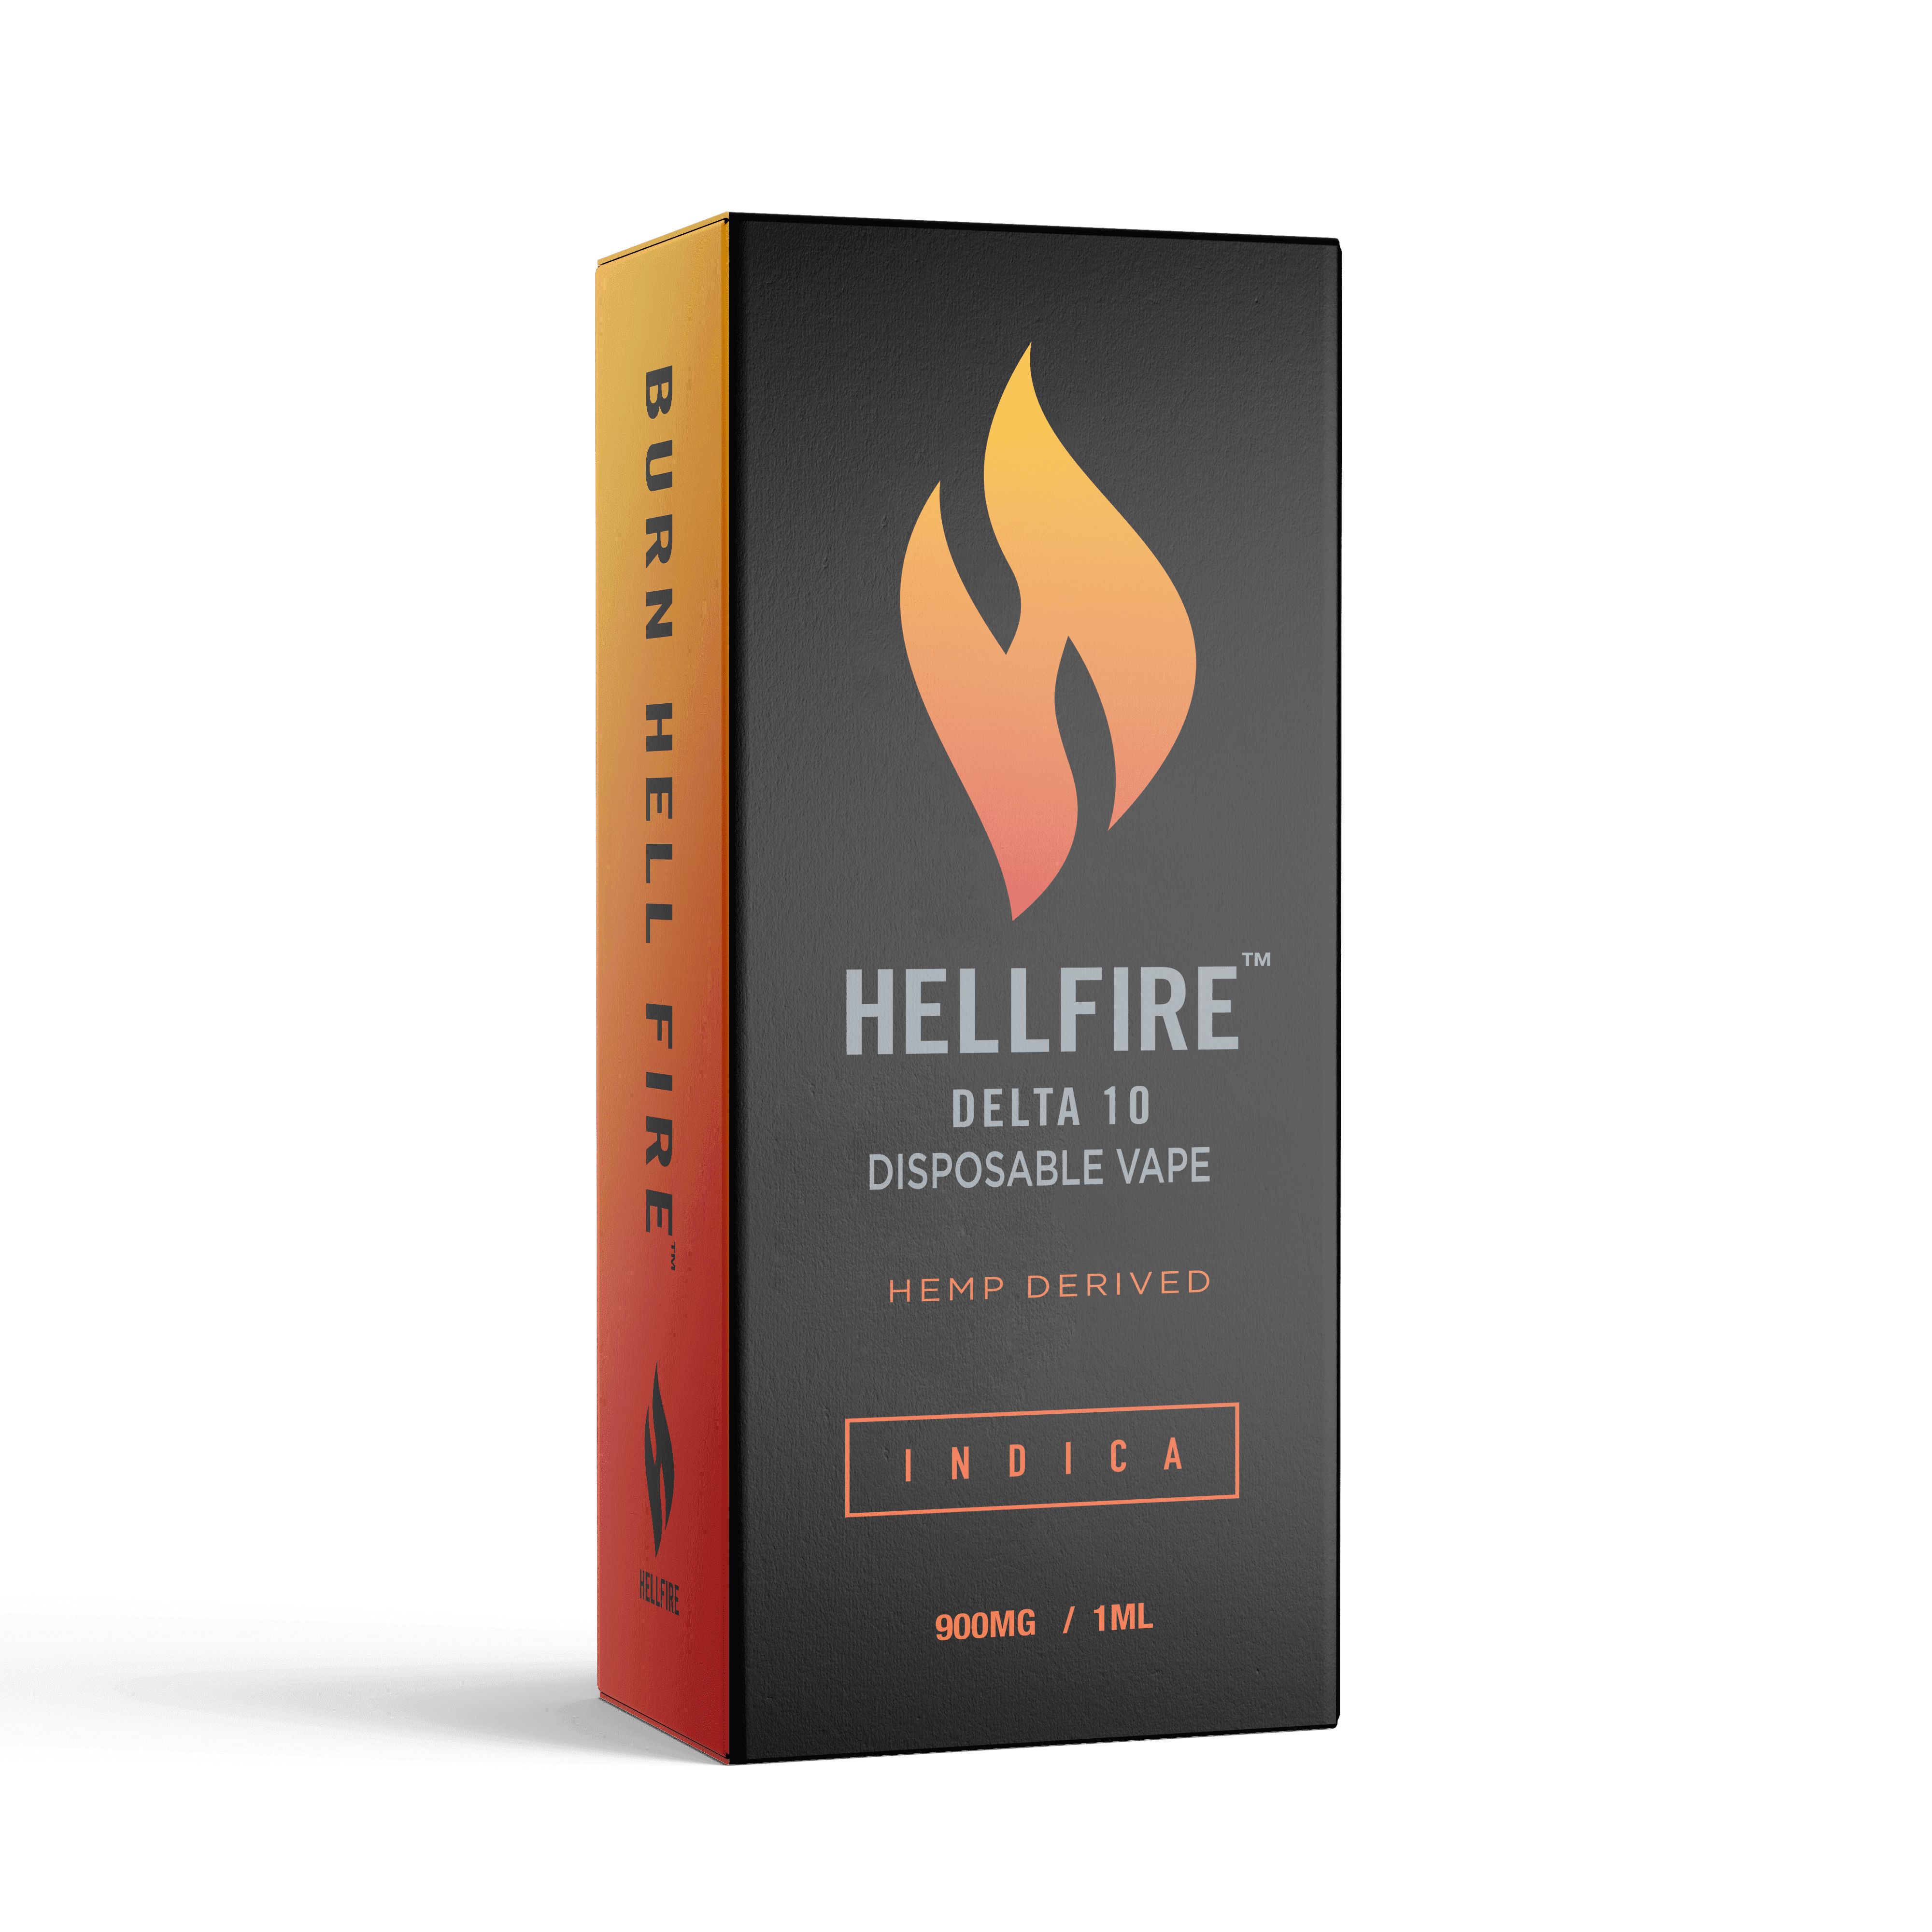 Hellfire Indica Delta 10 Disposable Vape Pen Best Price